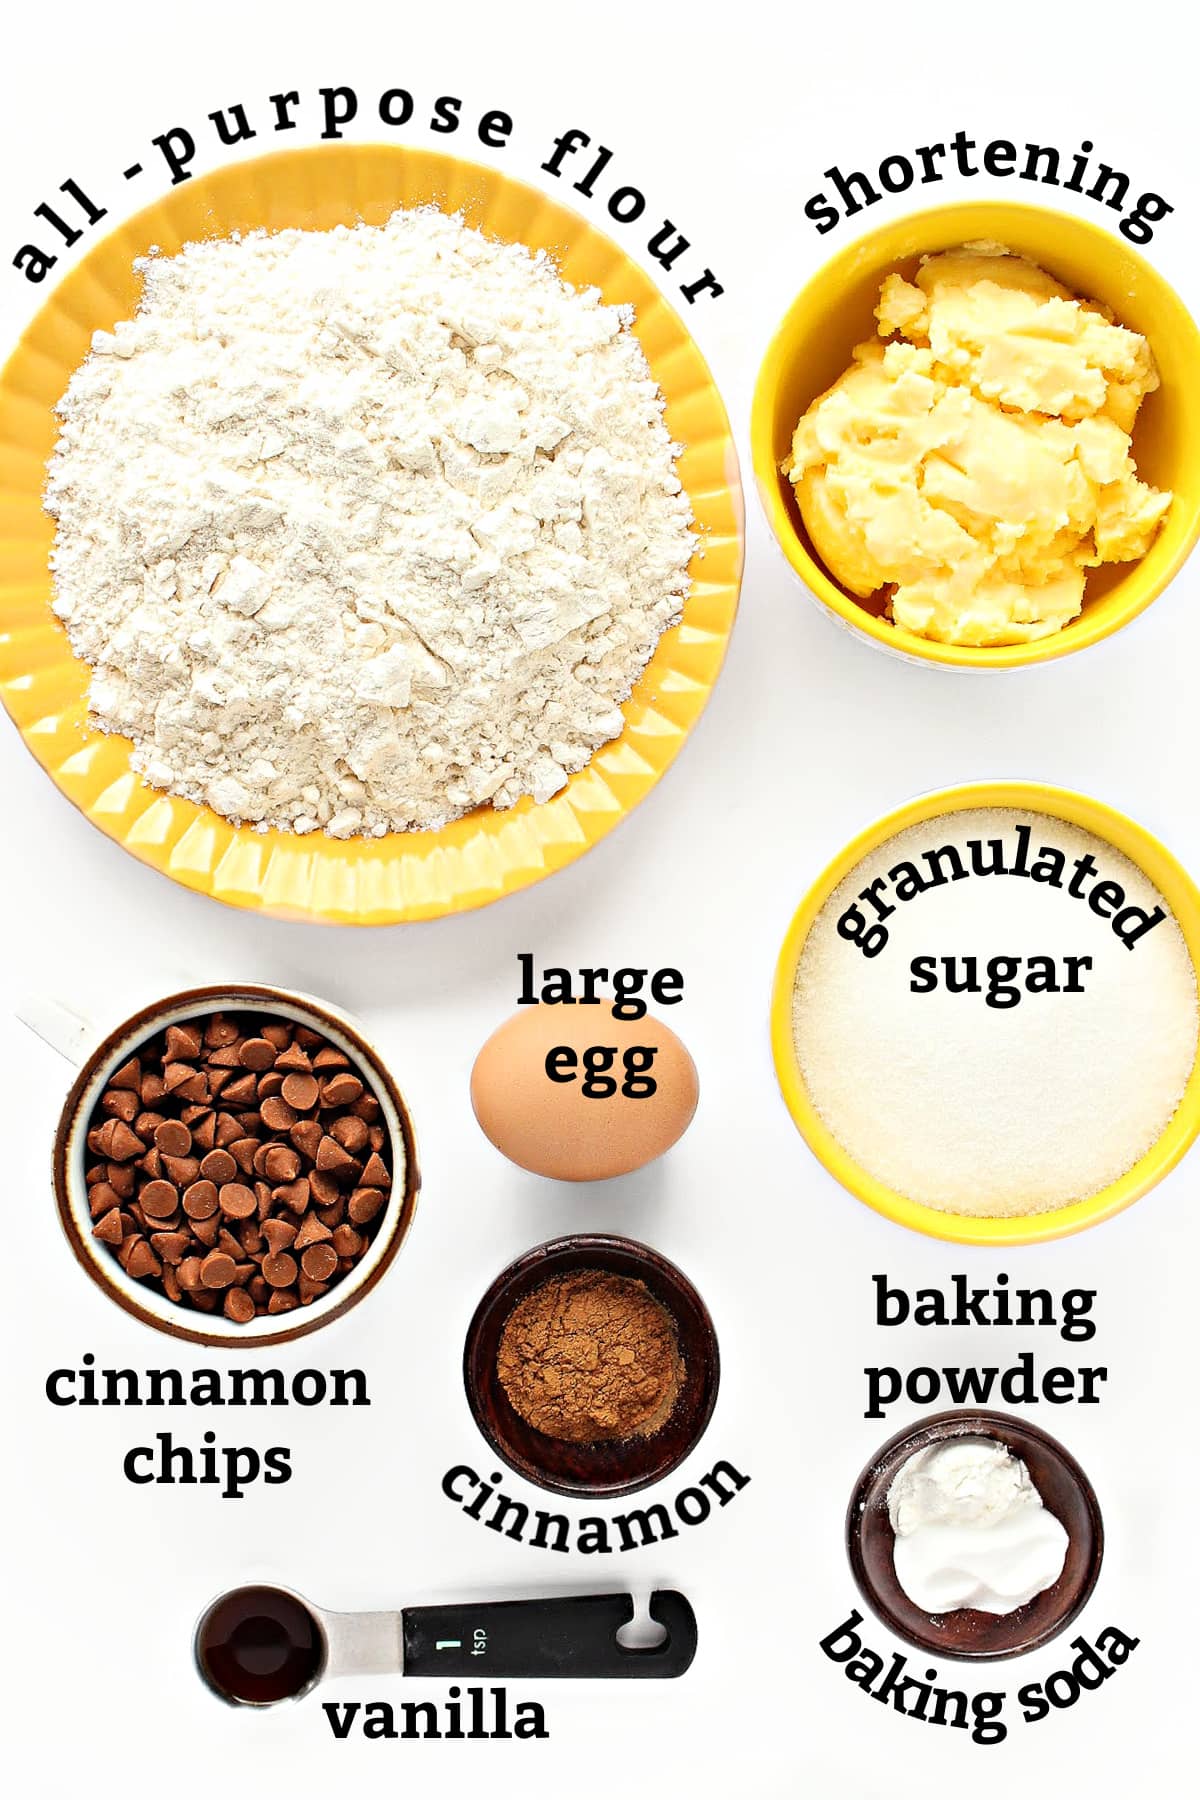 Ingredients labeled: flour, shortening, cinnamon chips, egg, sugar, cinnamon, baking powder, baking soda, vanilla.